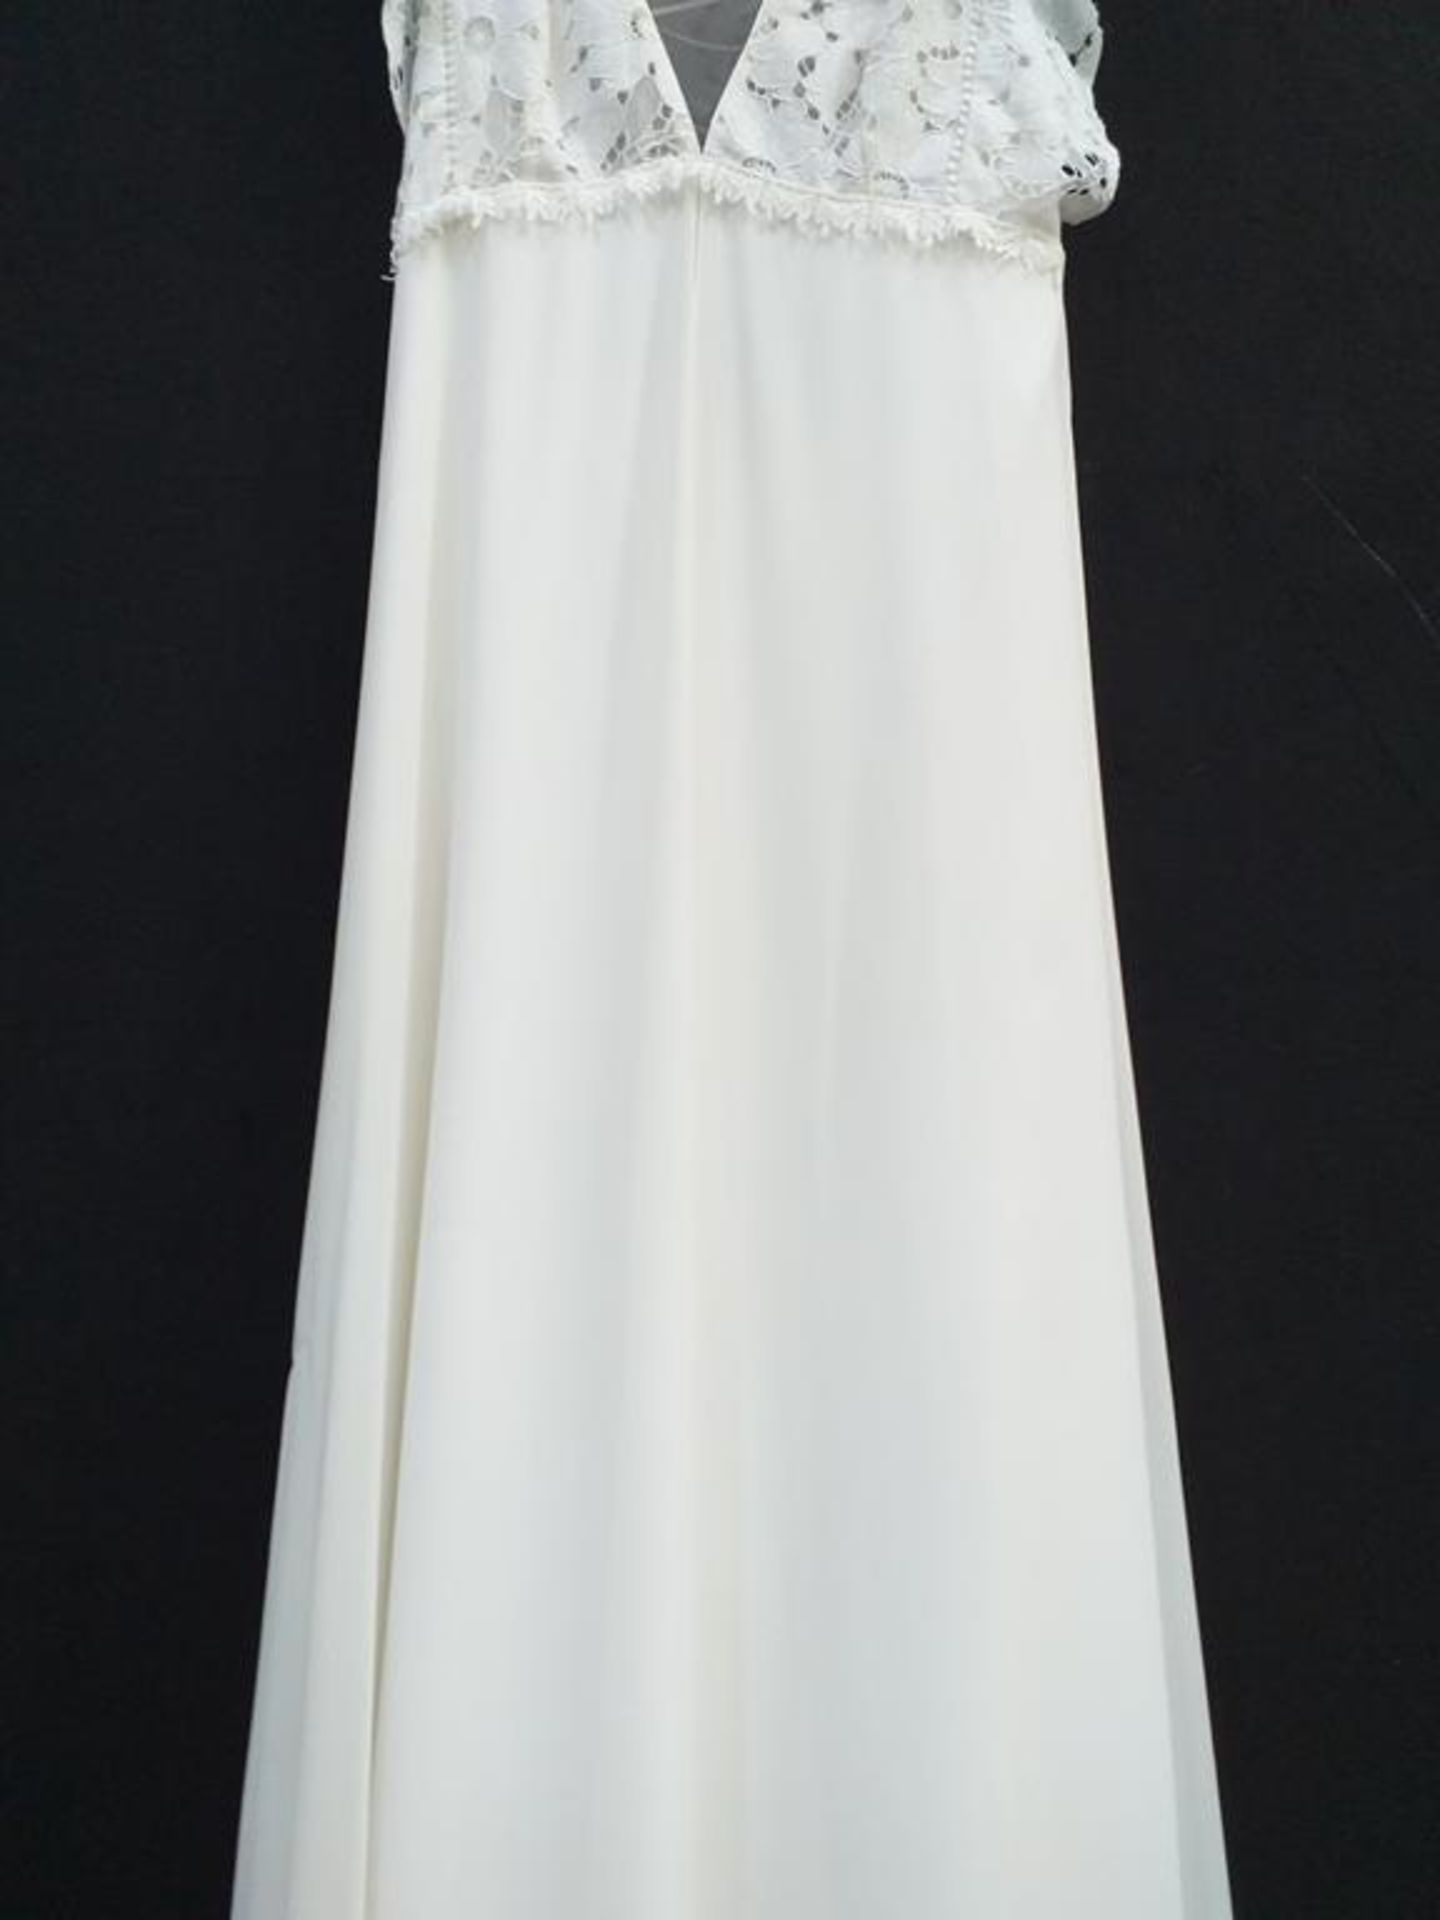 Rembo Styling Hollywood wedding dress - Image 3 of 13